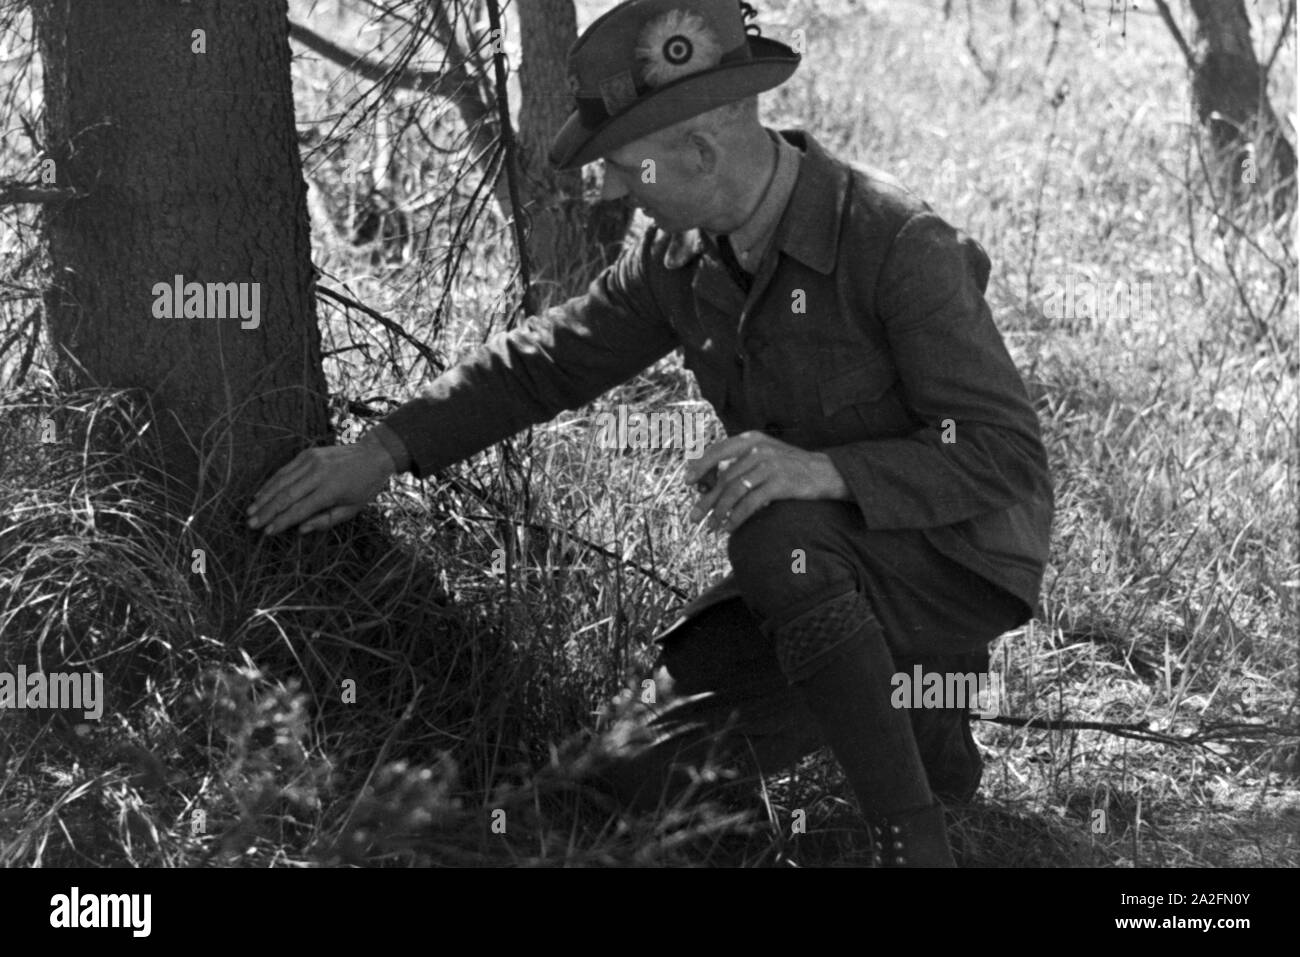 Förster im Wald, Deutschland 1930er Jahre. Forester in the wood, Germany 1930s. Stock Photo